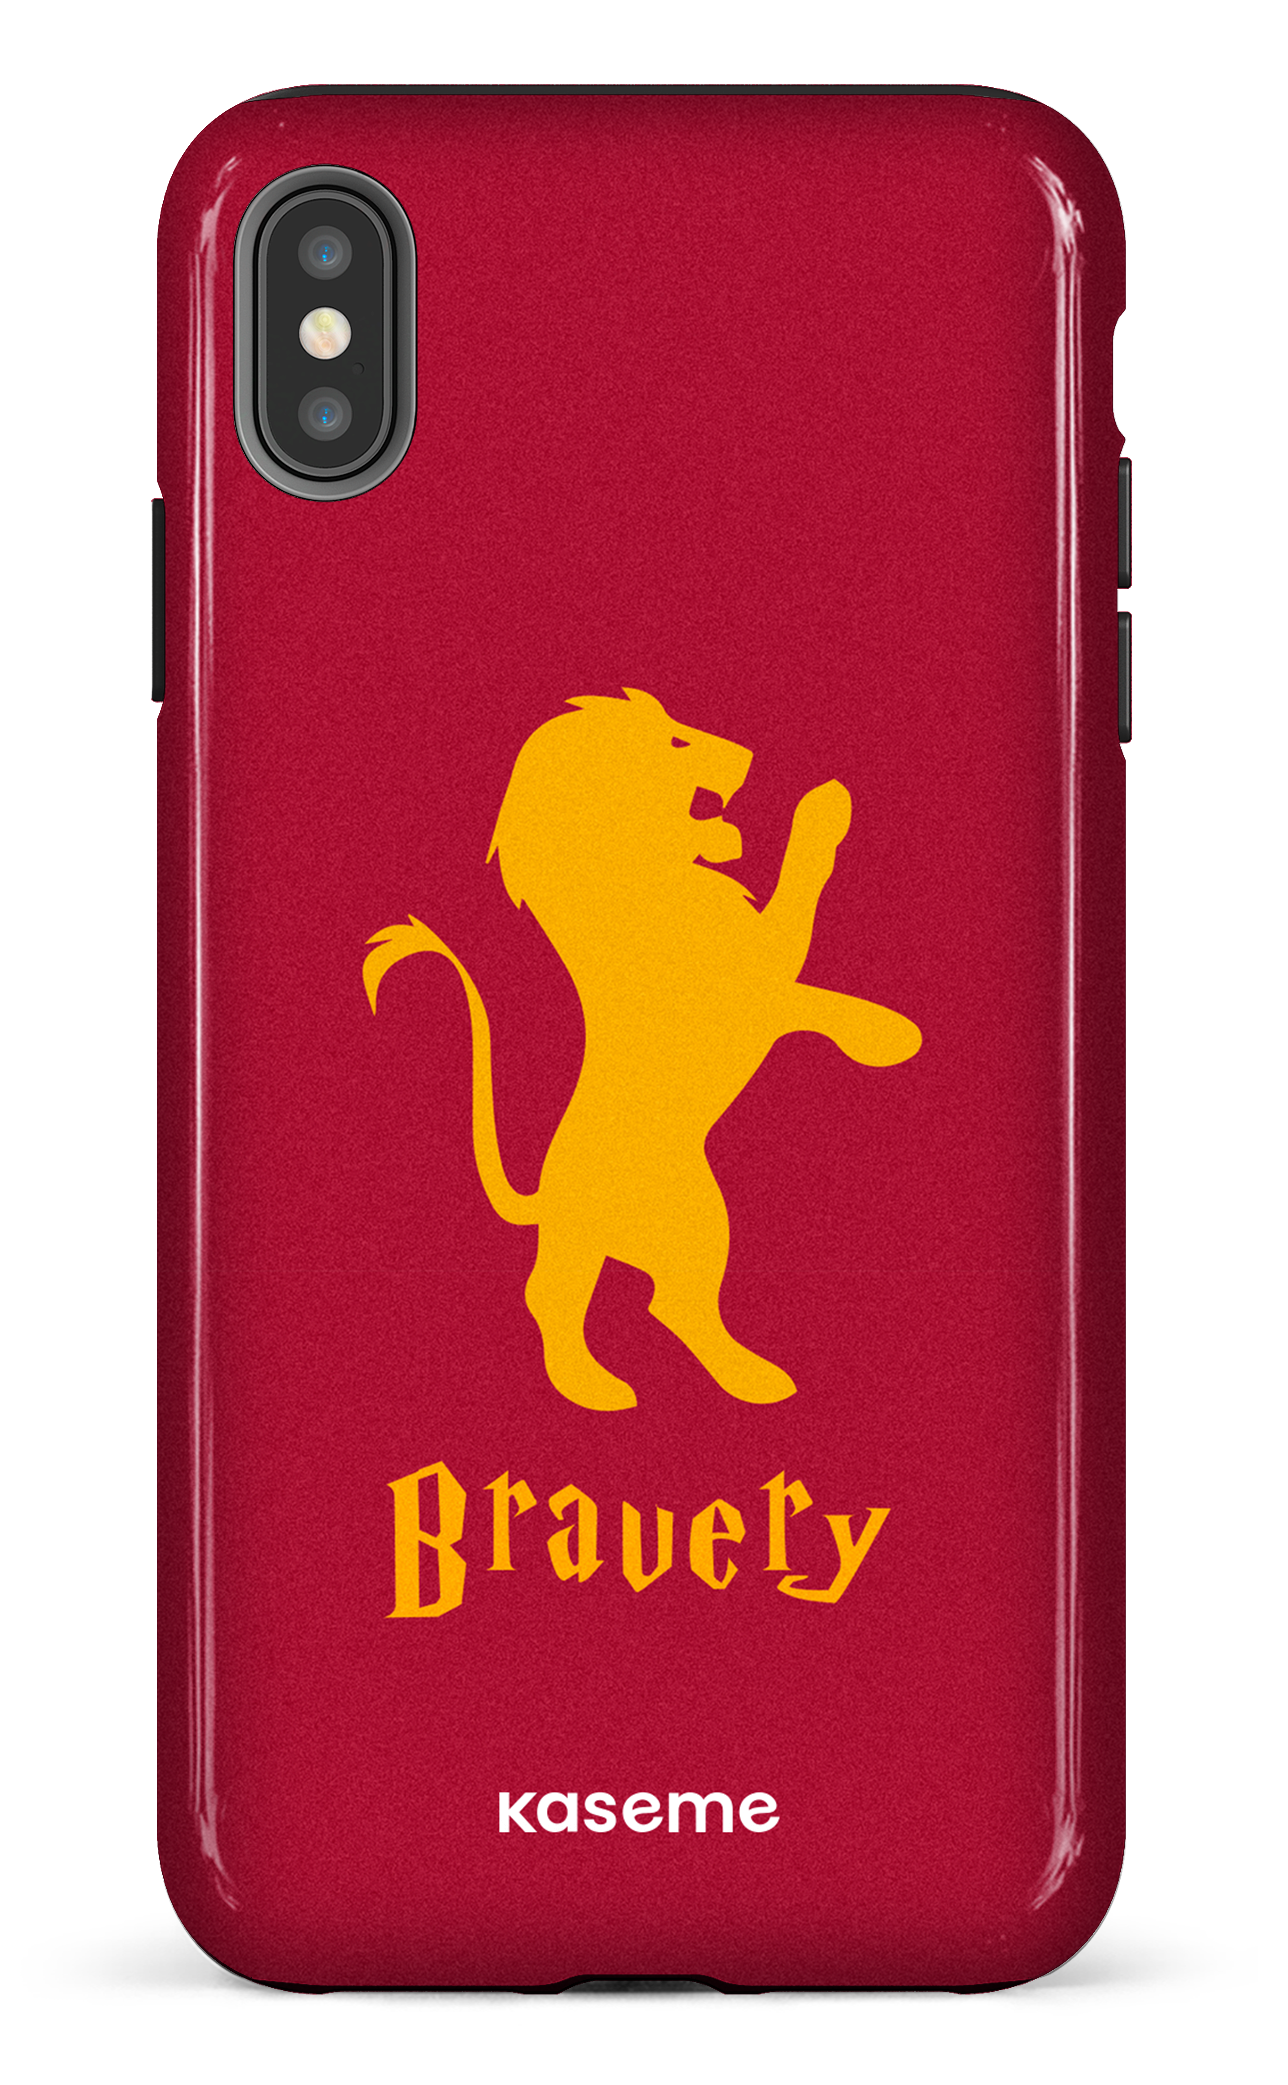 Bravery - iPhone XS Max